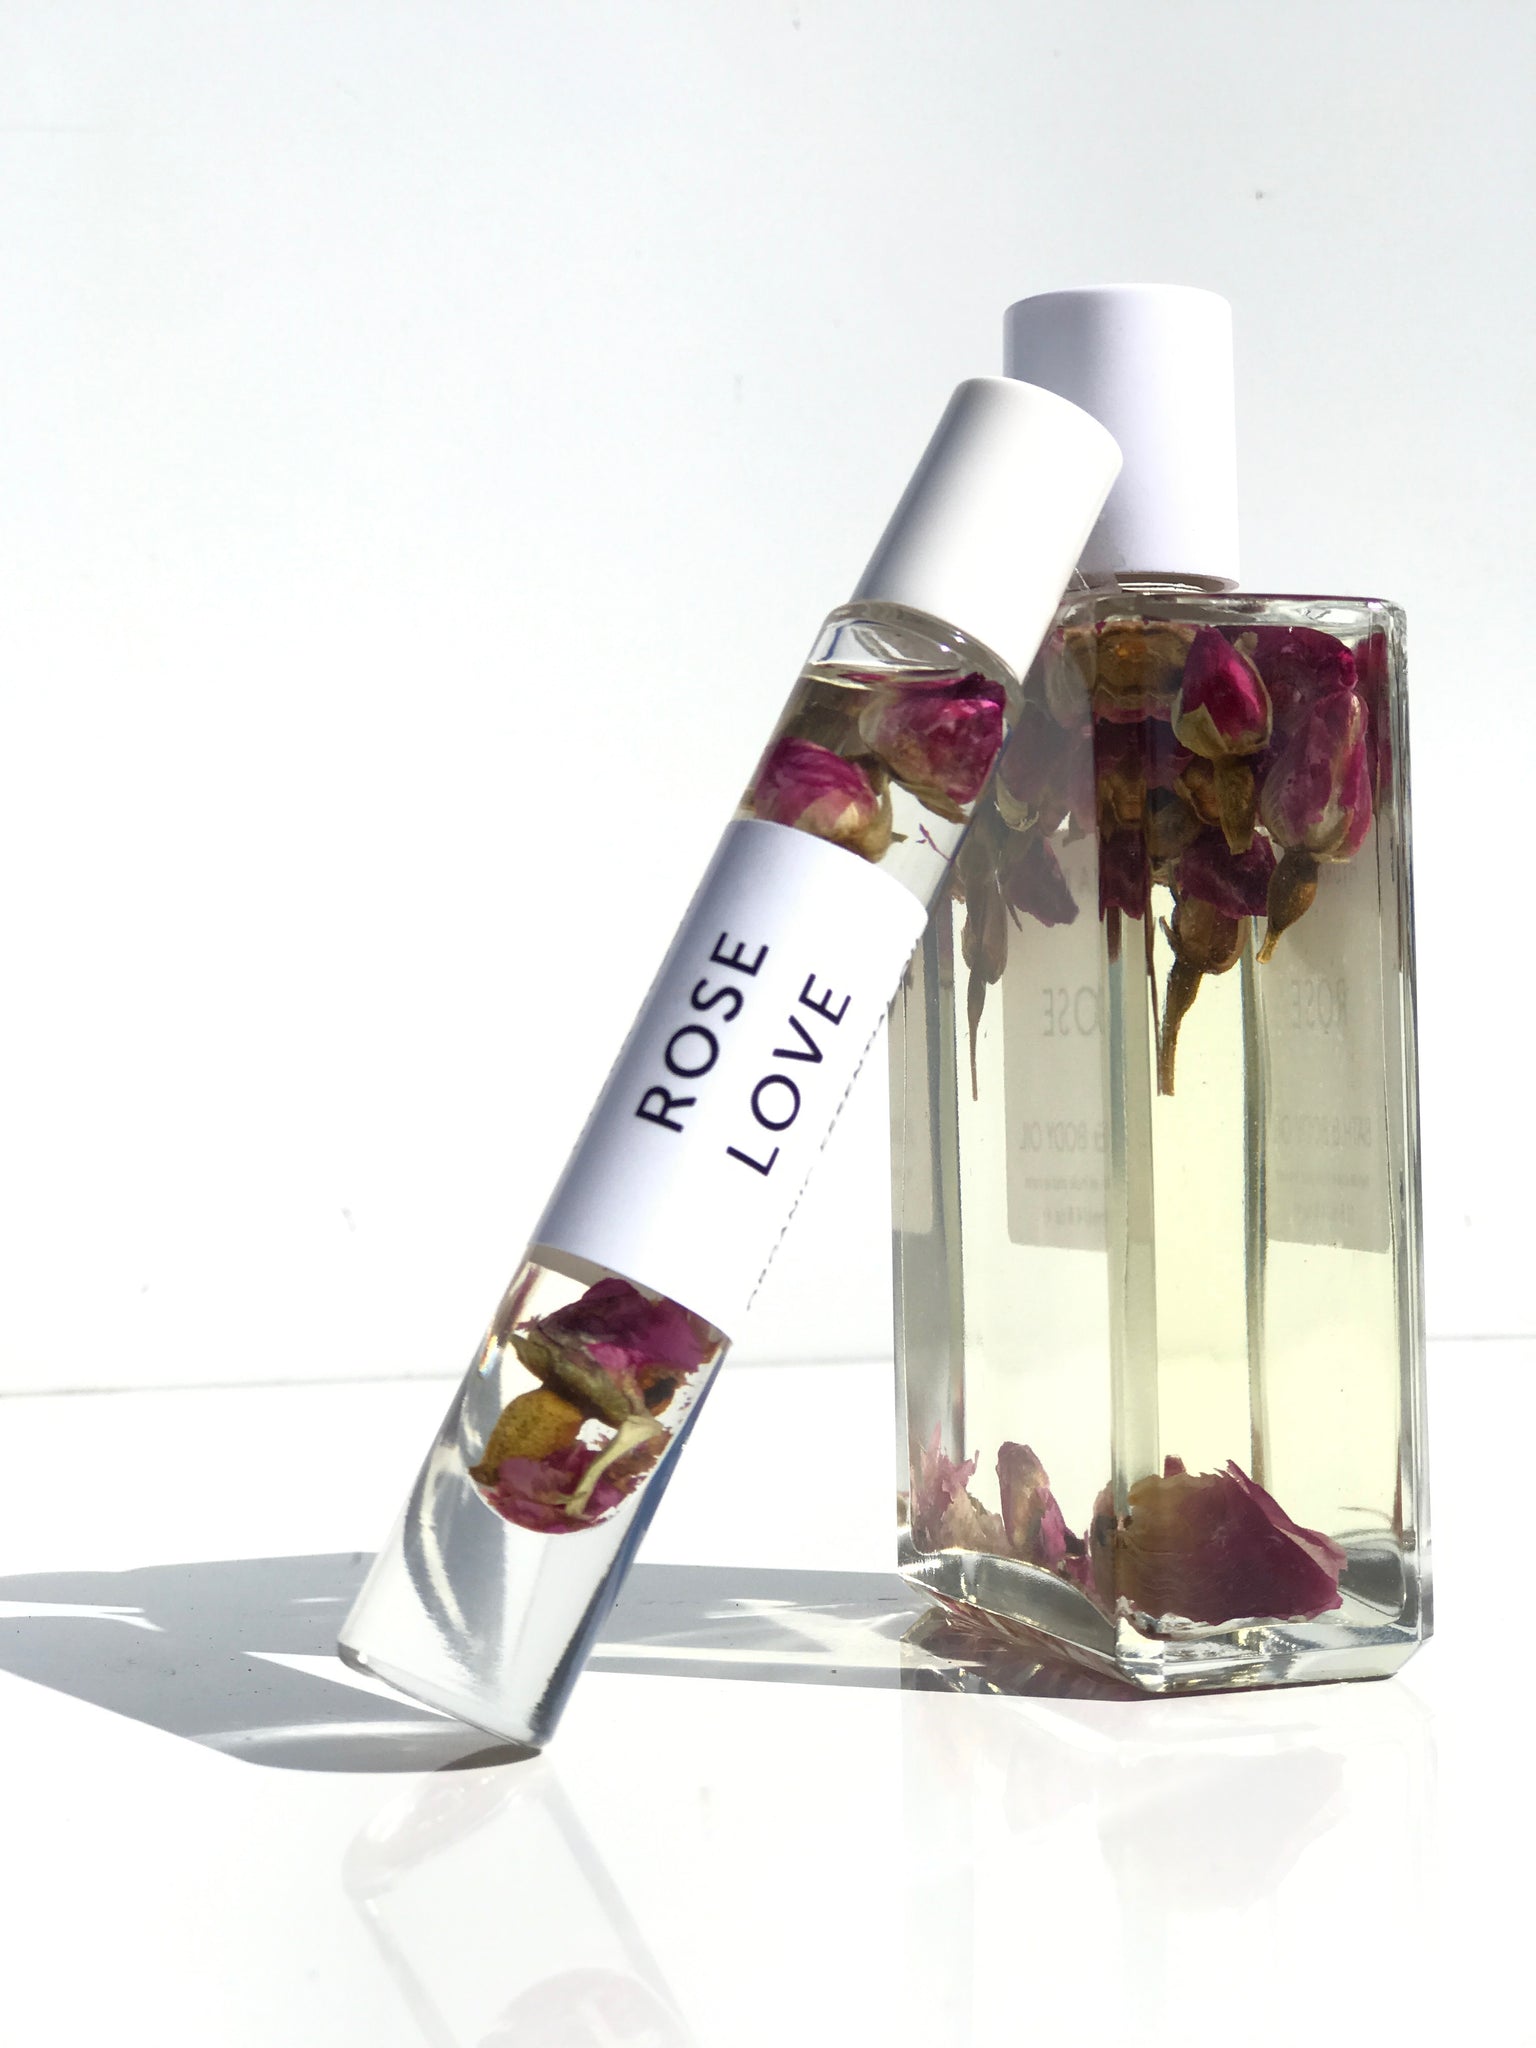 Wild Jasmine Roll-on Perfume Oil  Hydra Bloom – Hydra Bloom Beauty USA